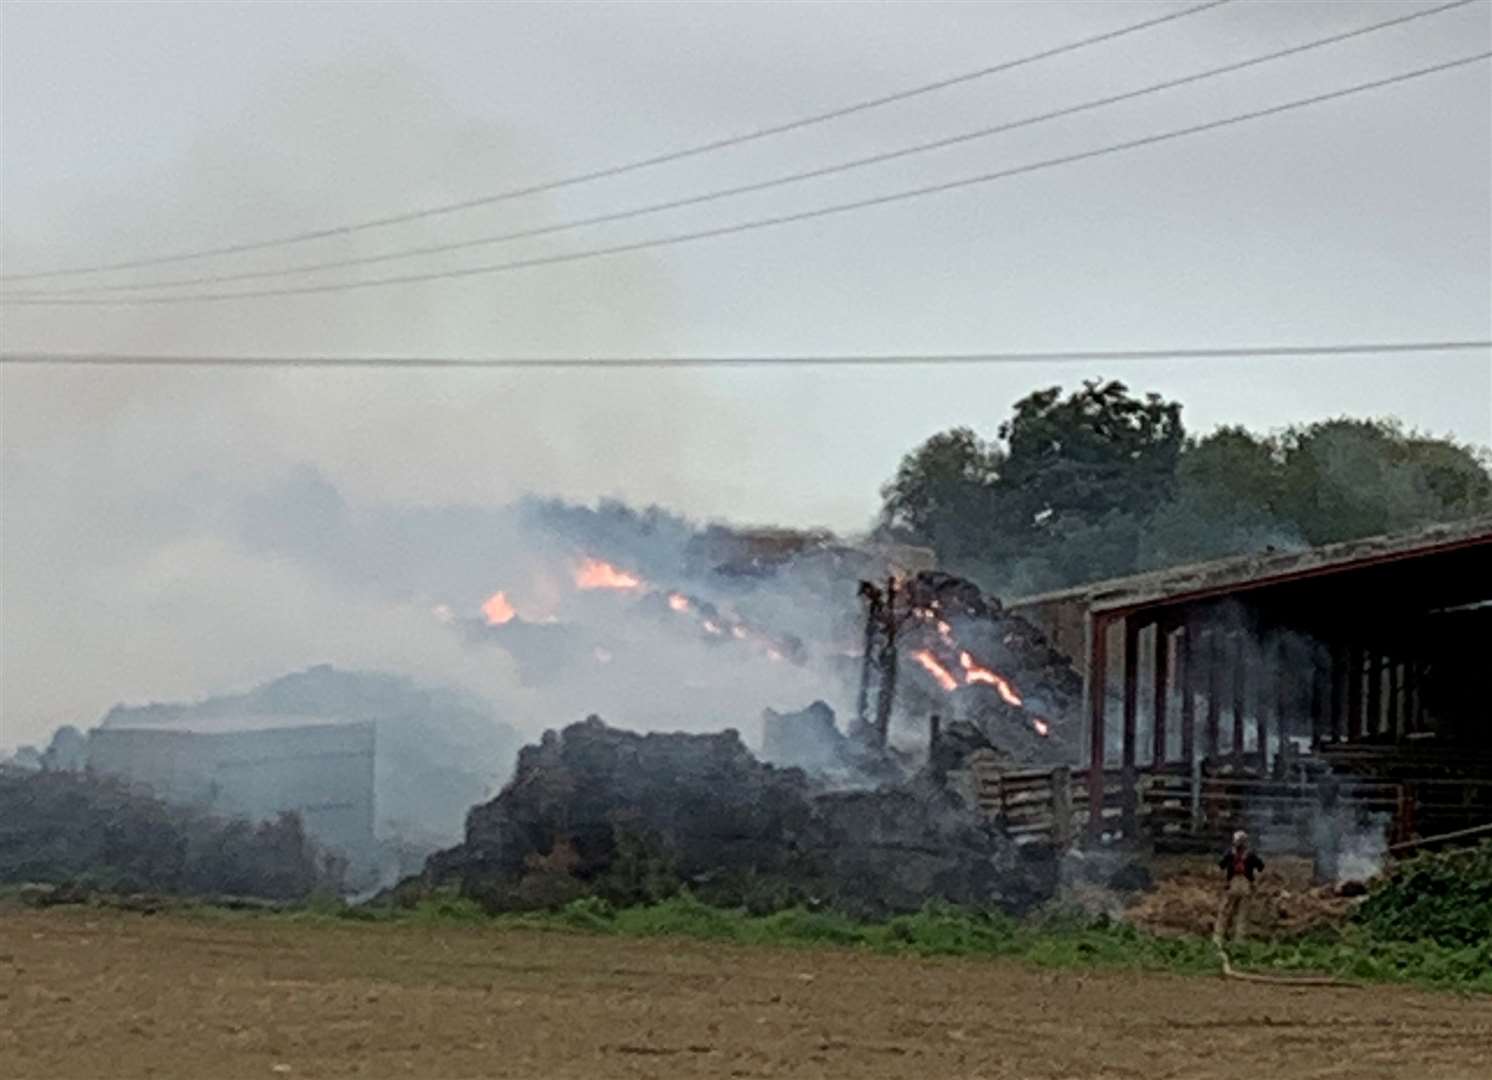 The fire at Elmtree Farm, Sellindge is still burning